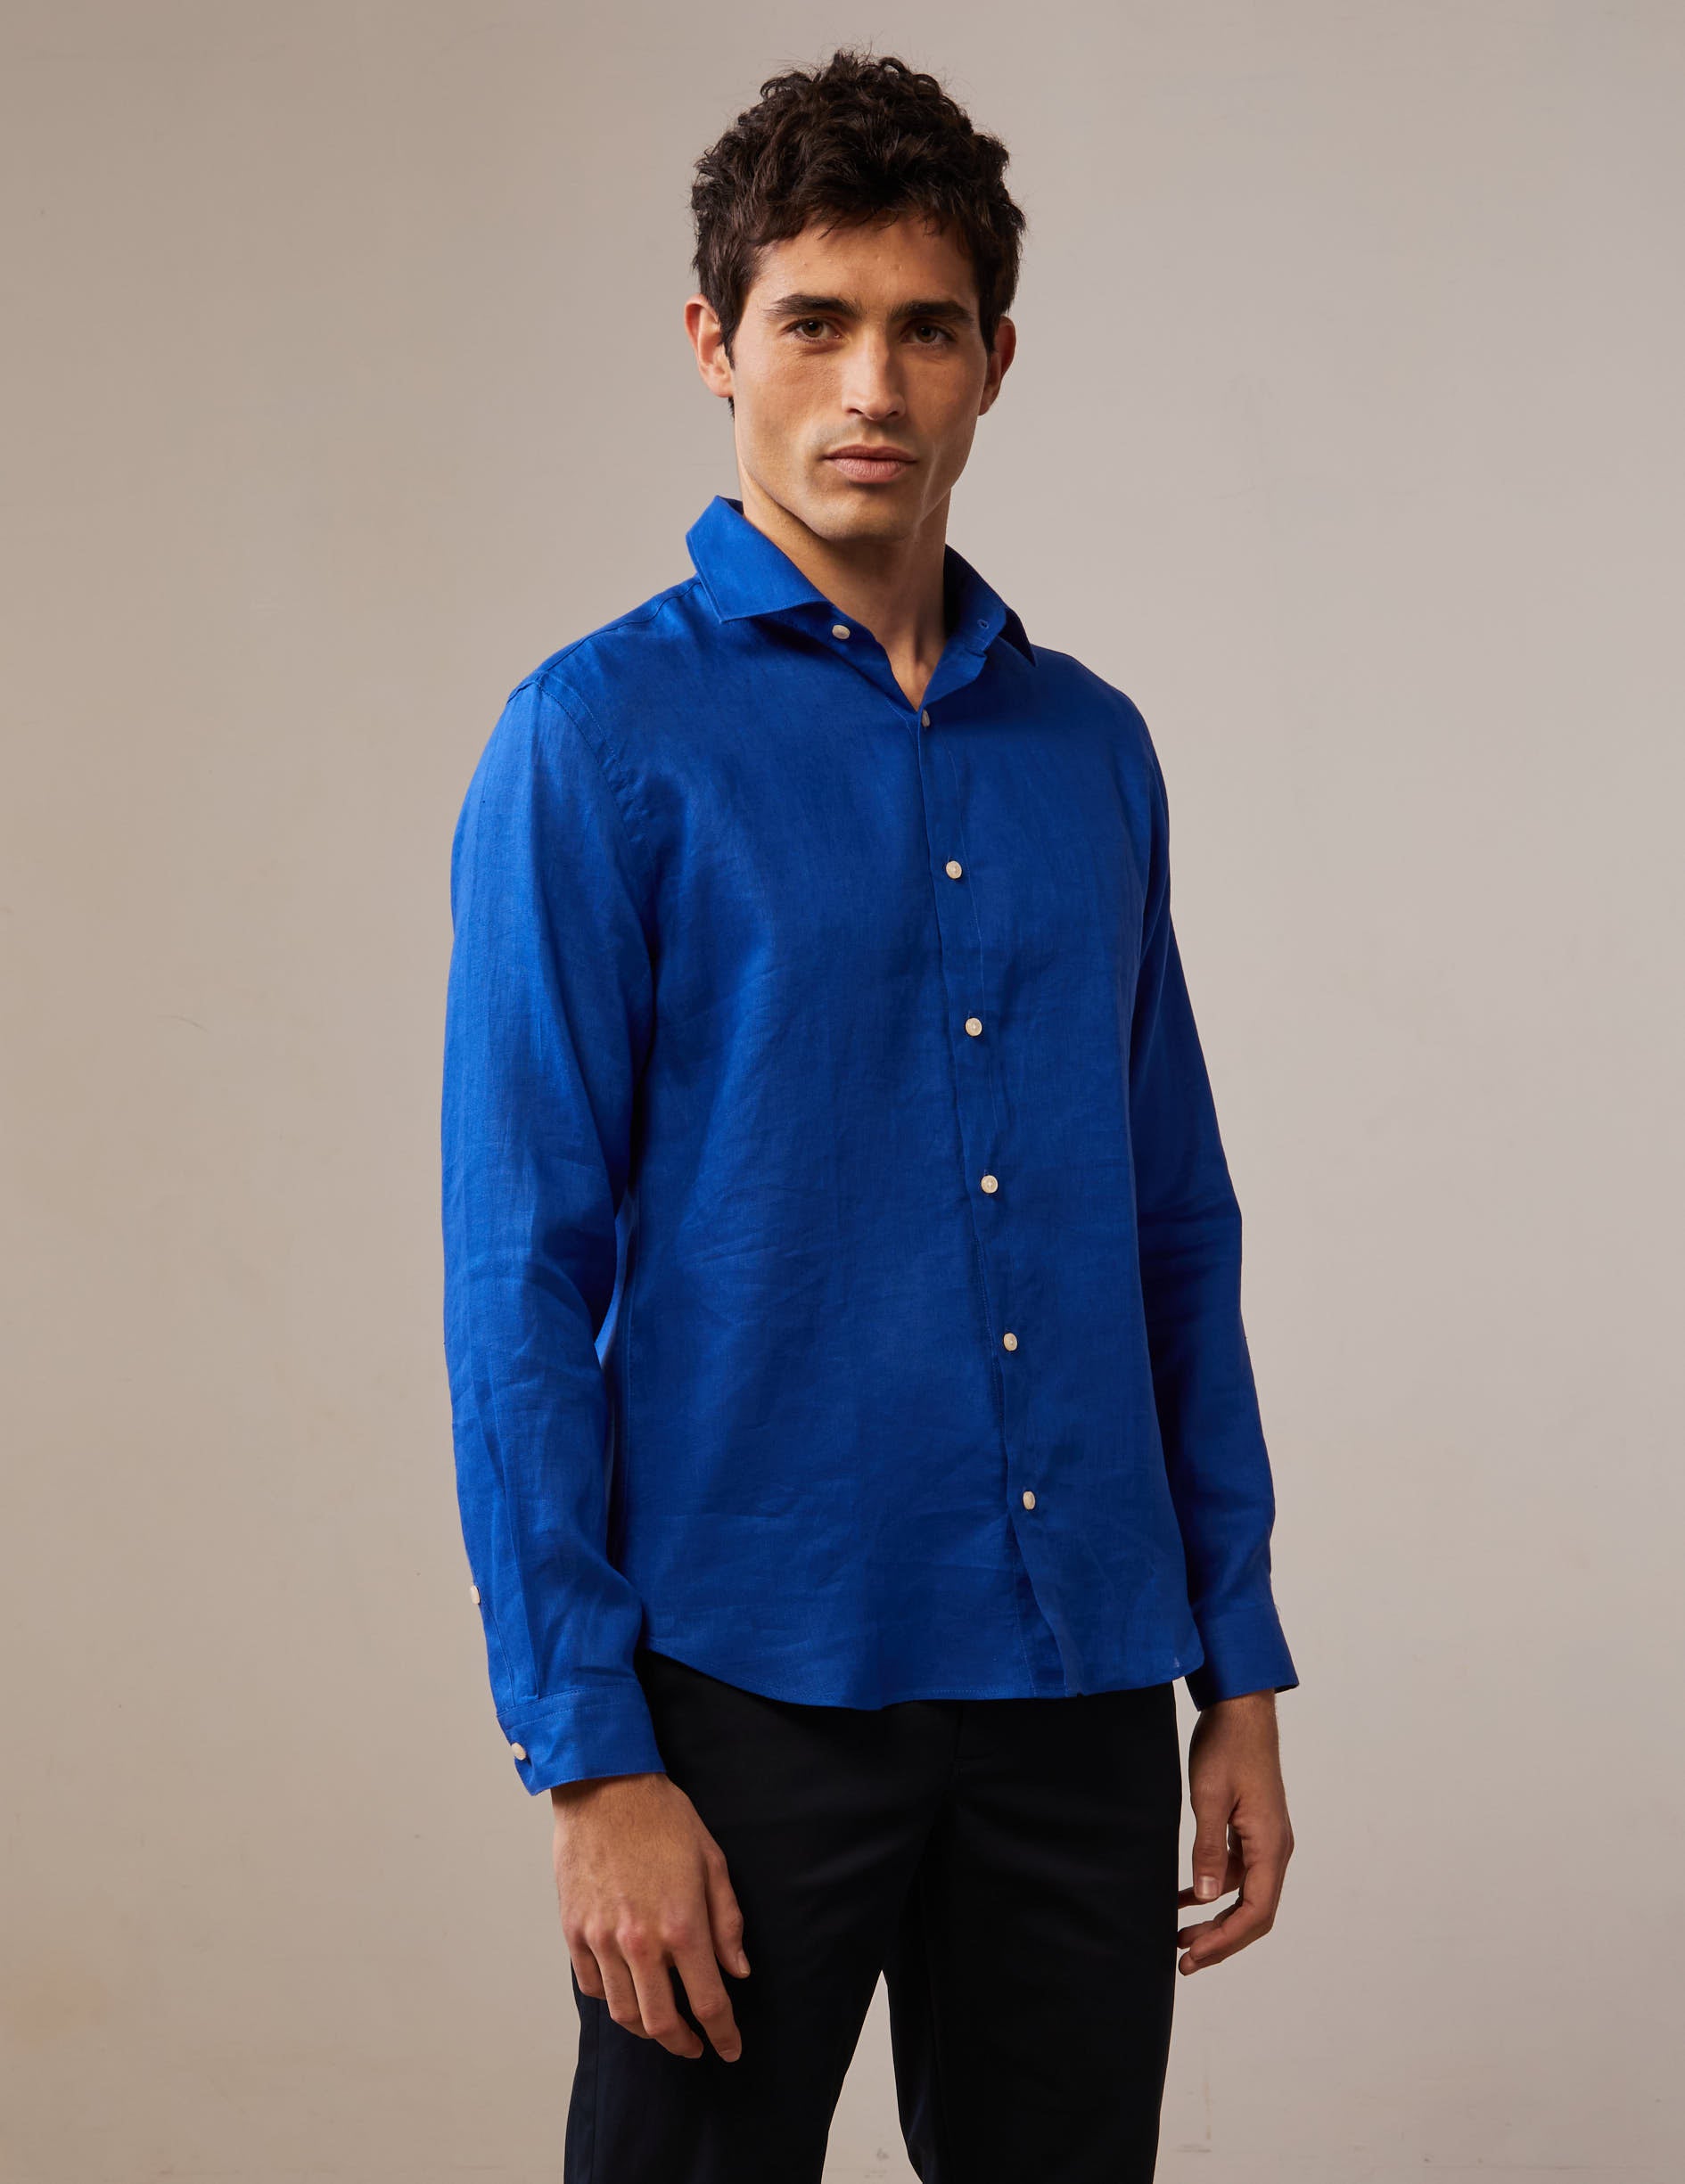 Auguste shirt in blue linen